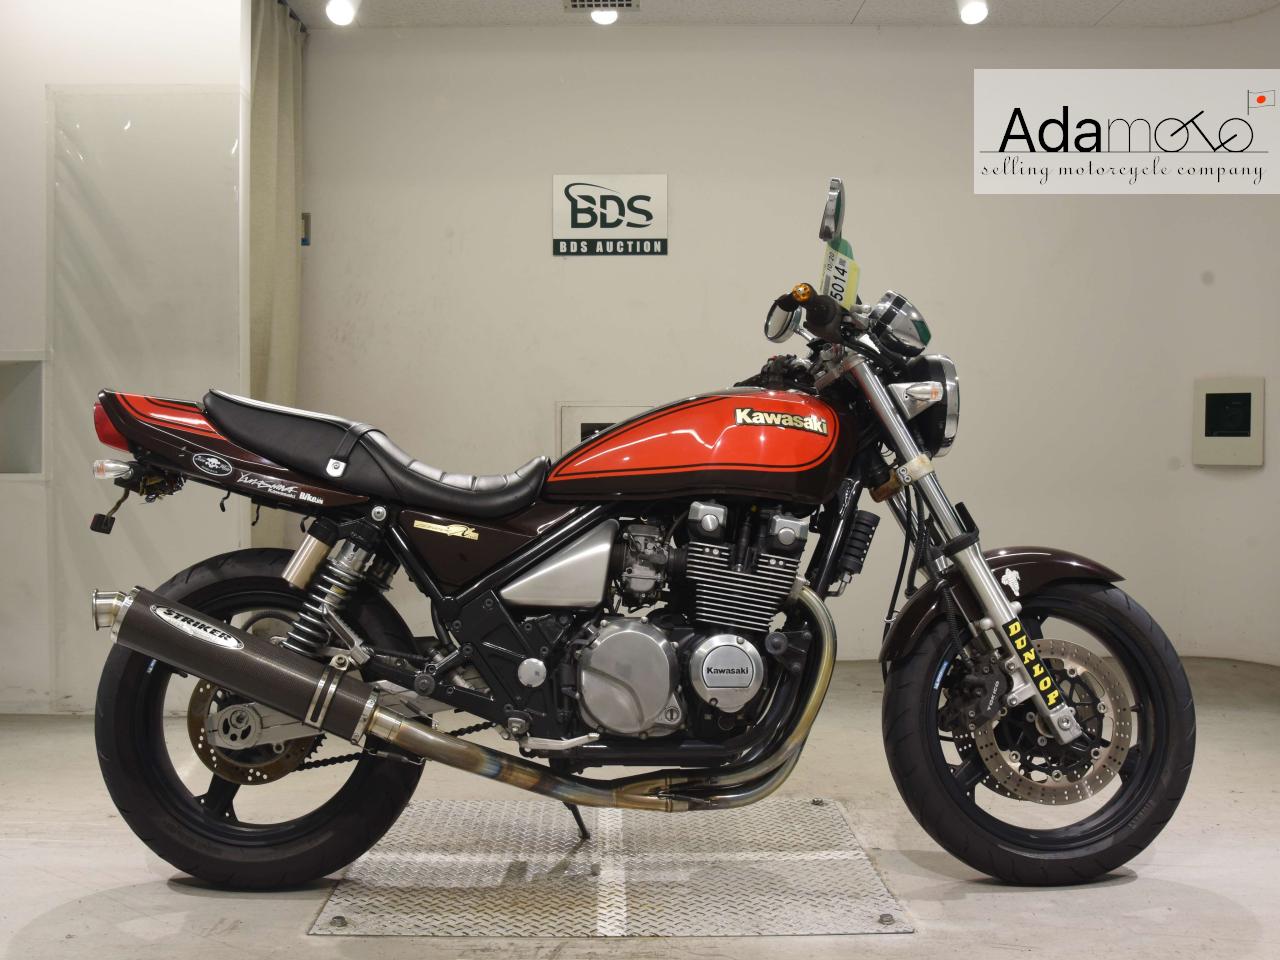 Kawasaki ZEPHYR400KAI - Adamoto - Motorcycles from Japan